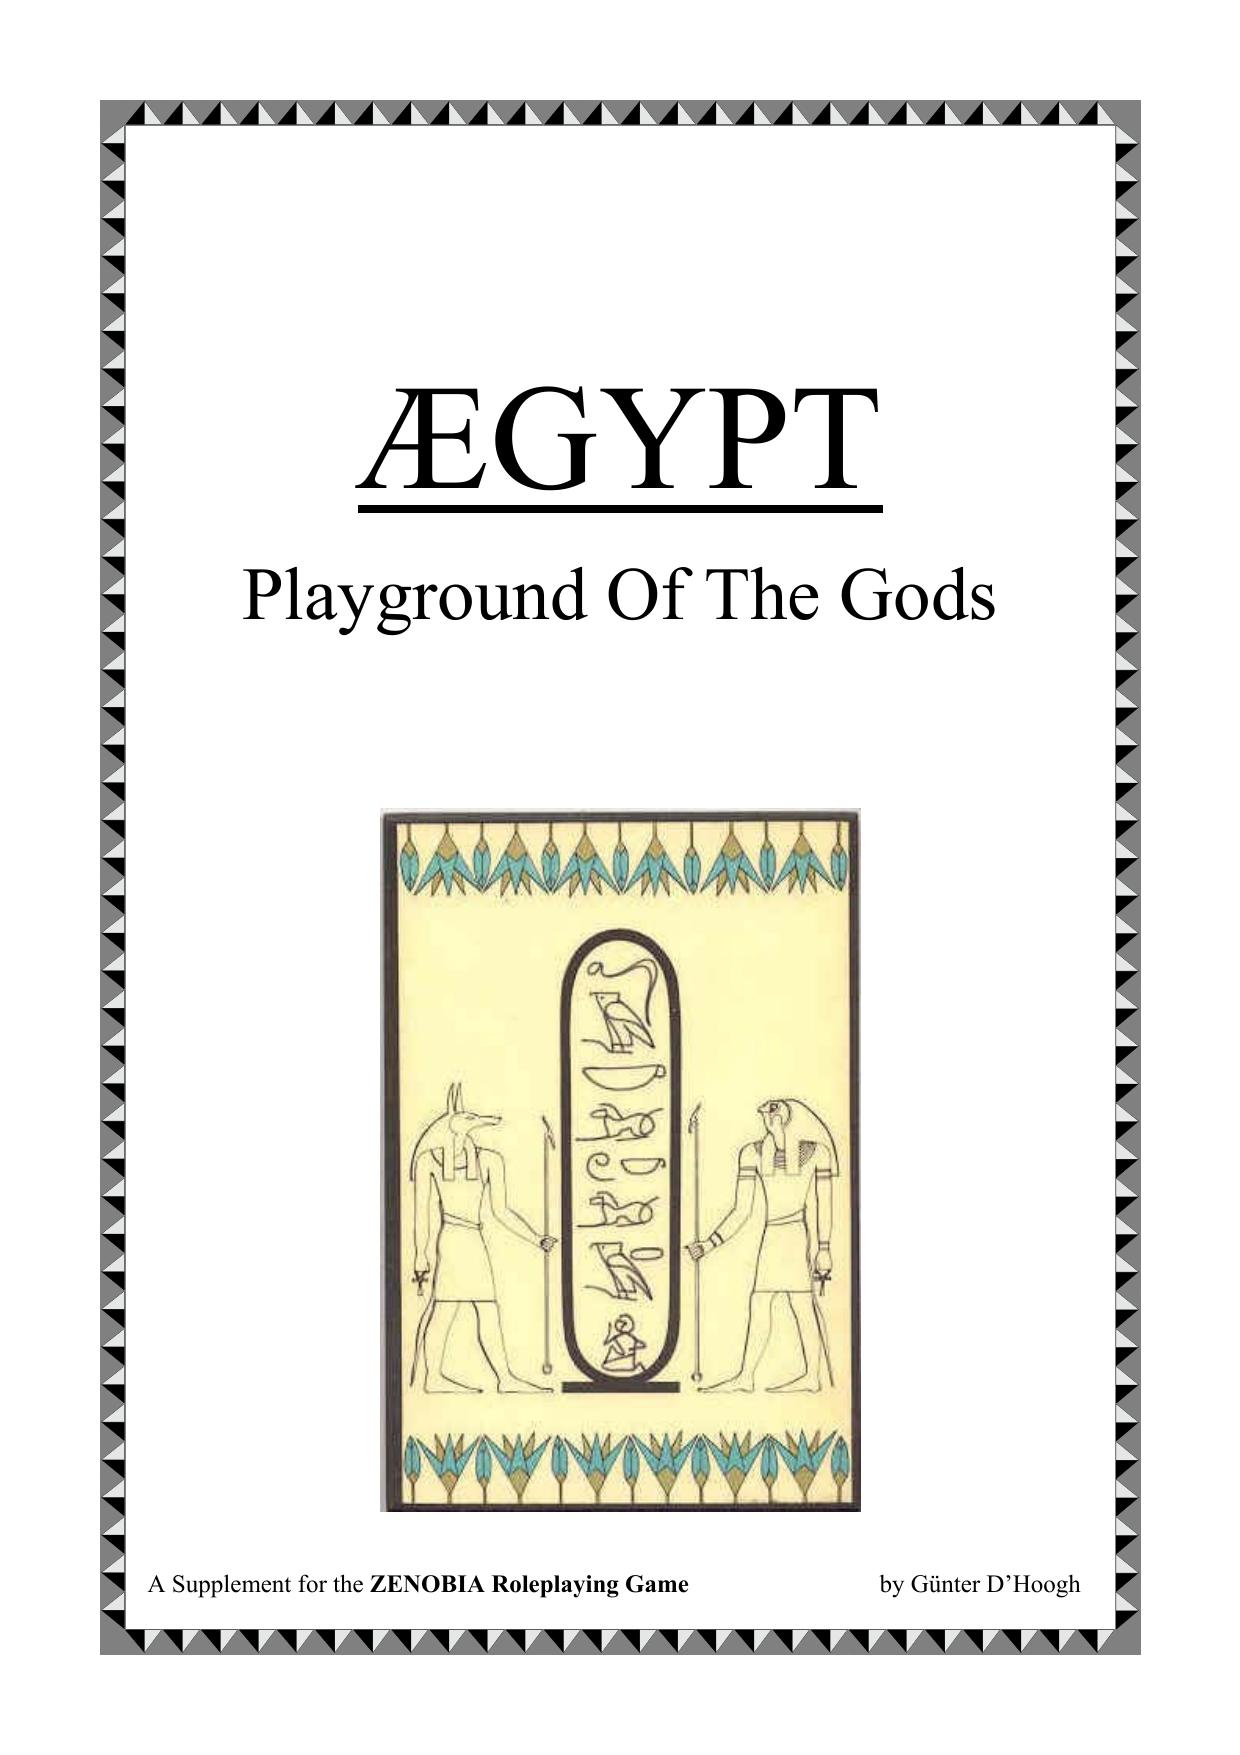 Zenobia Ægypt Playground of the Gods